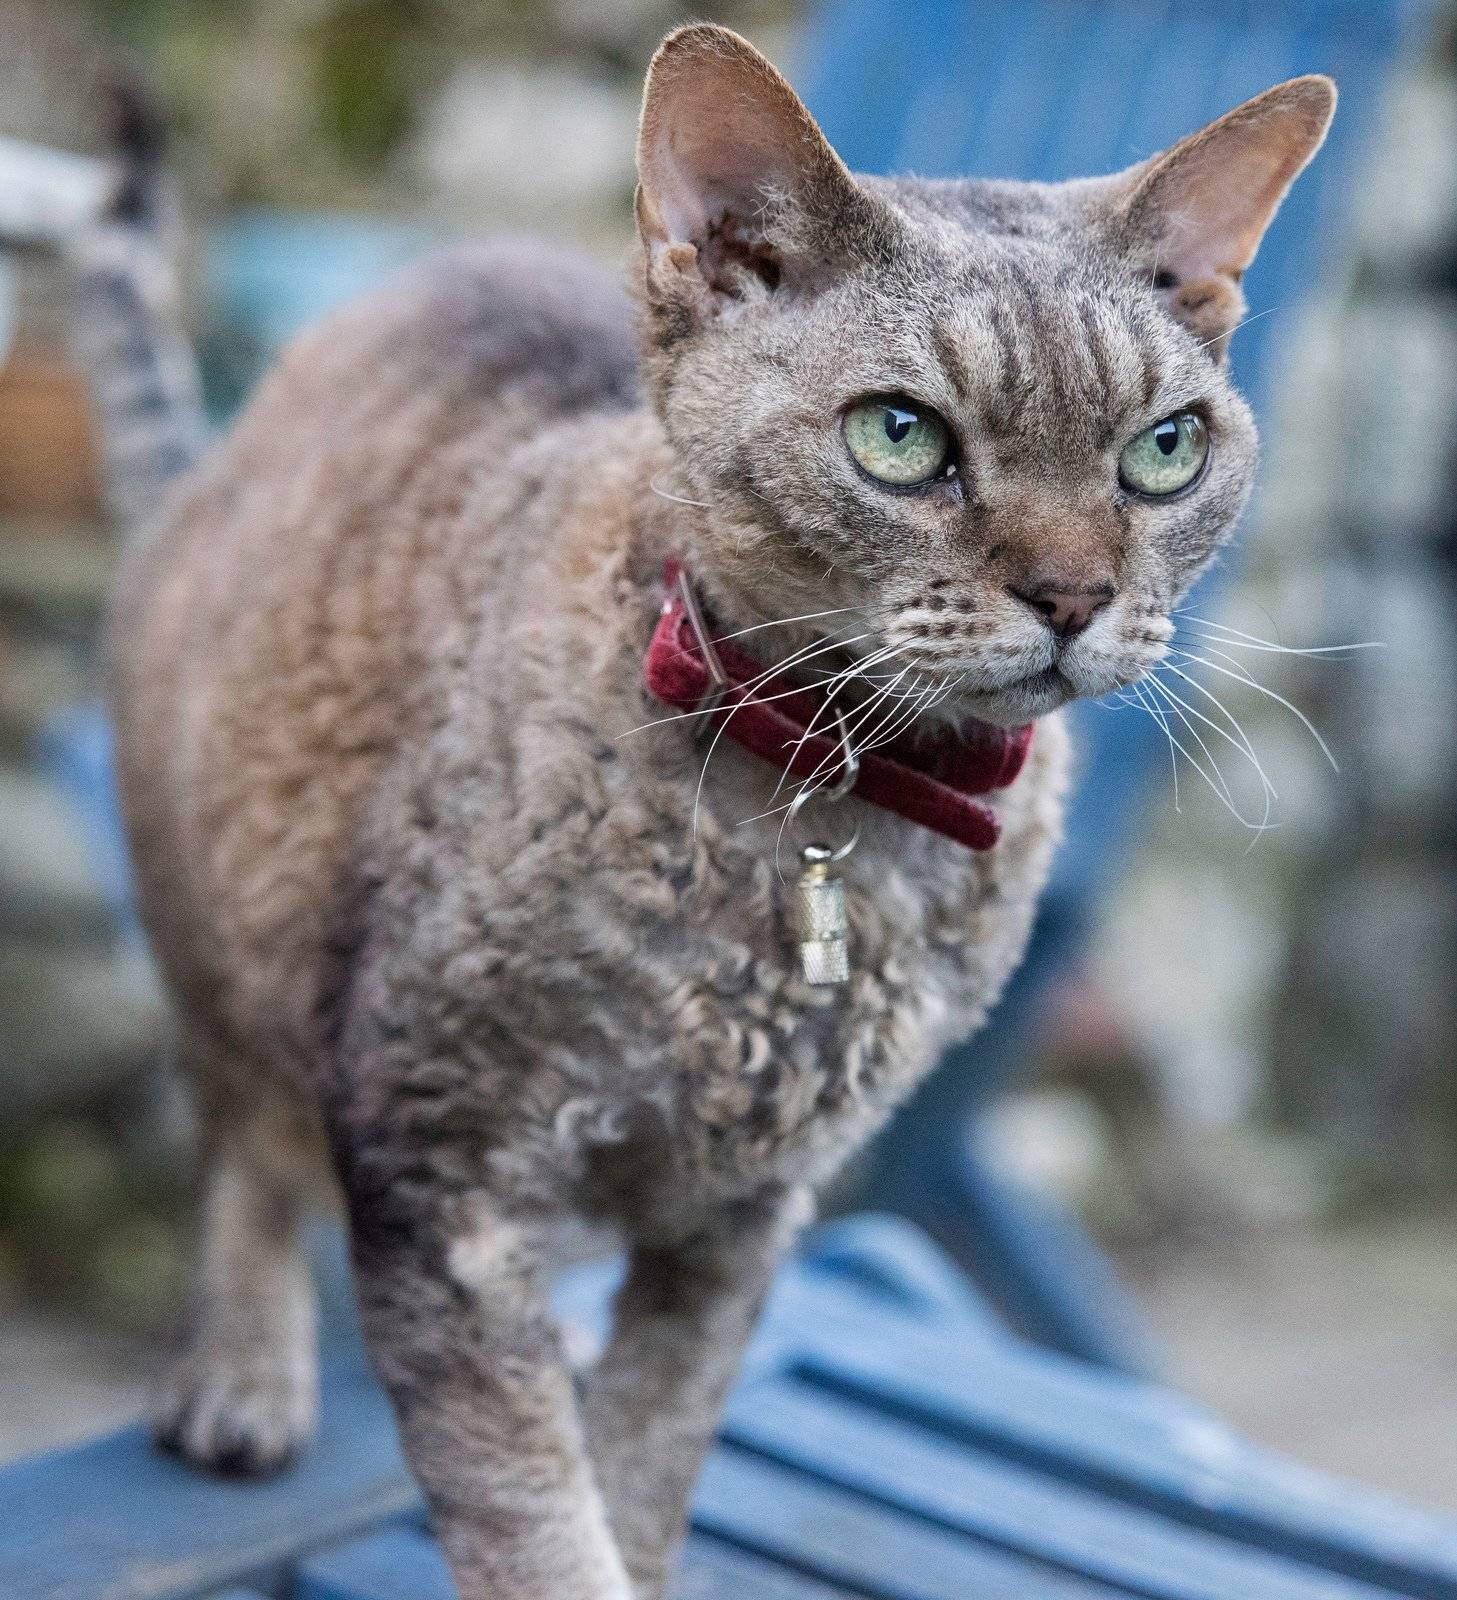 Селкирк рекс: фото кошки, цена, описание породы, характер, видео, питомники